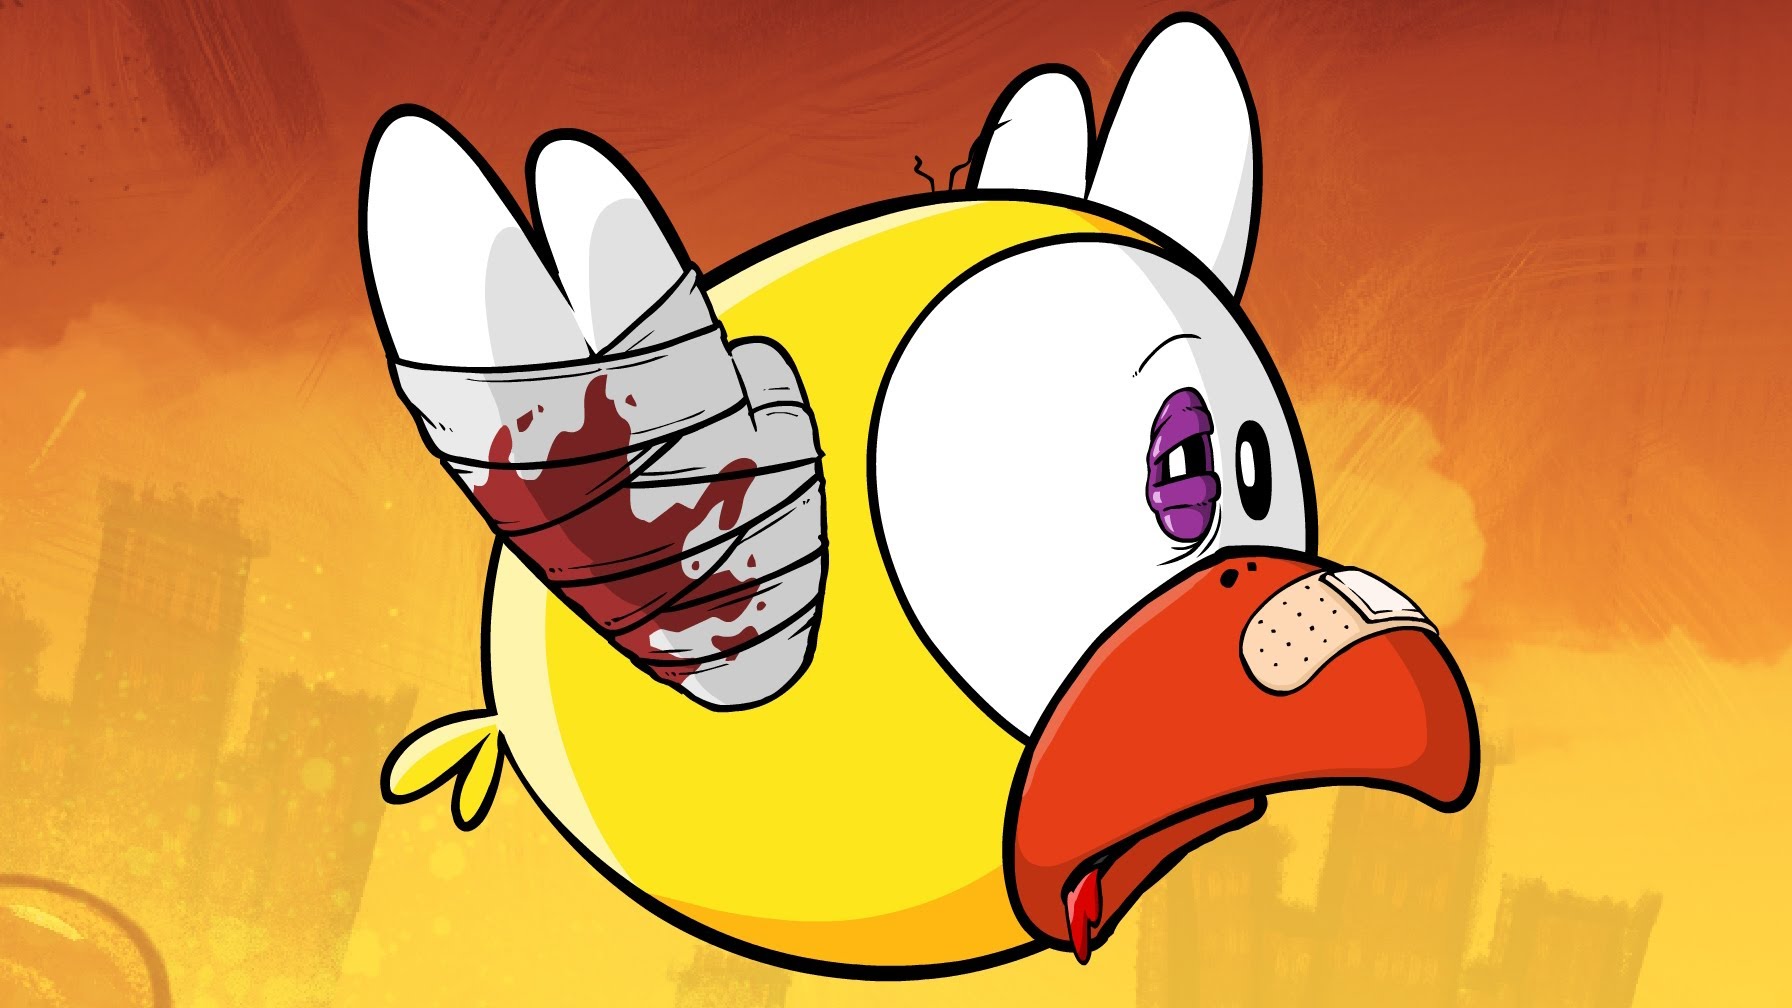 RIP FLAPPY BIRD | Super Mario Plays Flappy Bird - YouTube